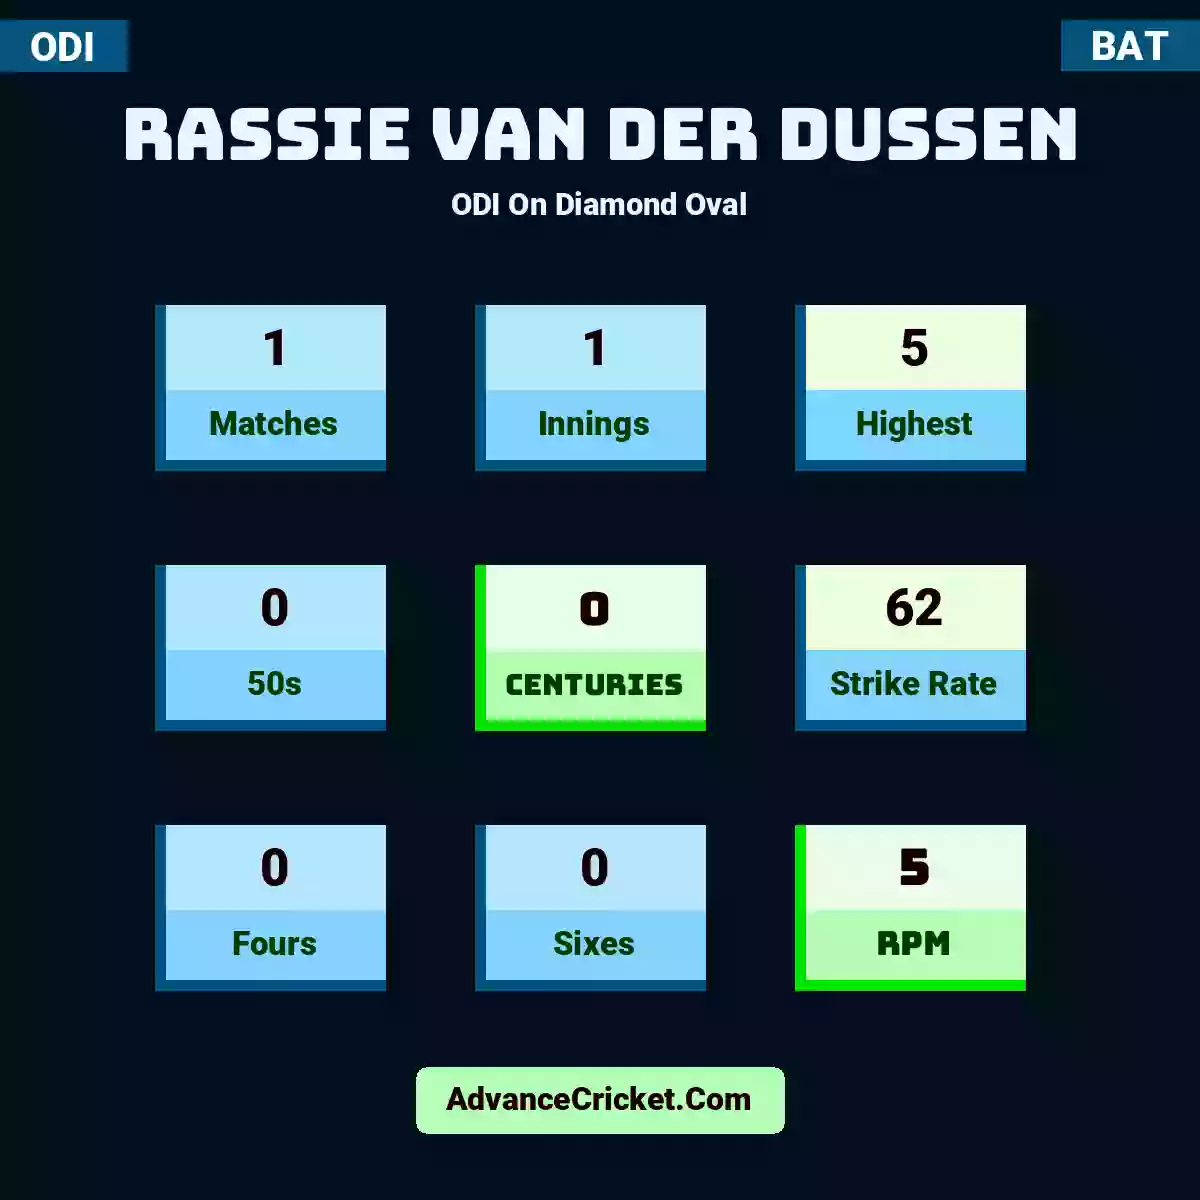 Rassie van der Dussen ODI  On Diamond Oval, Rassie van der Dussen played 1 matches, scored 5 runs as highest, 0 half-centuries, and 0 centuries, with a strike rate of 62. R.Dussen hit 0 fours and 0 sixes, with an RPM of 5.